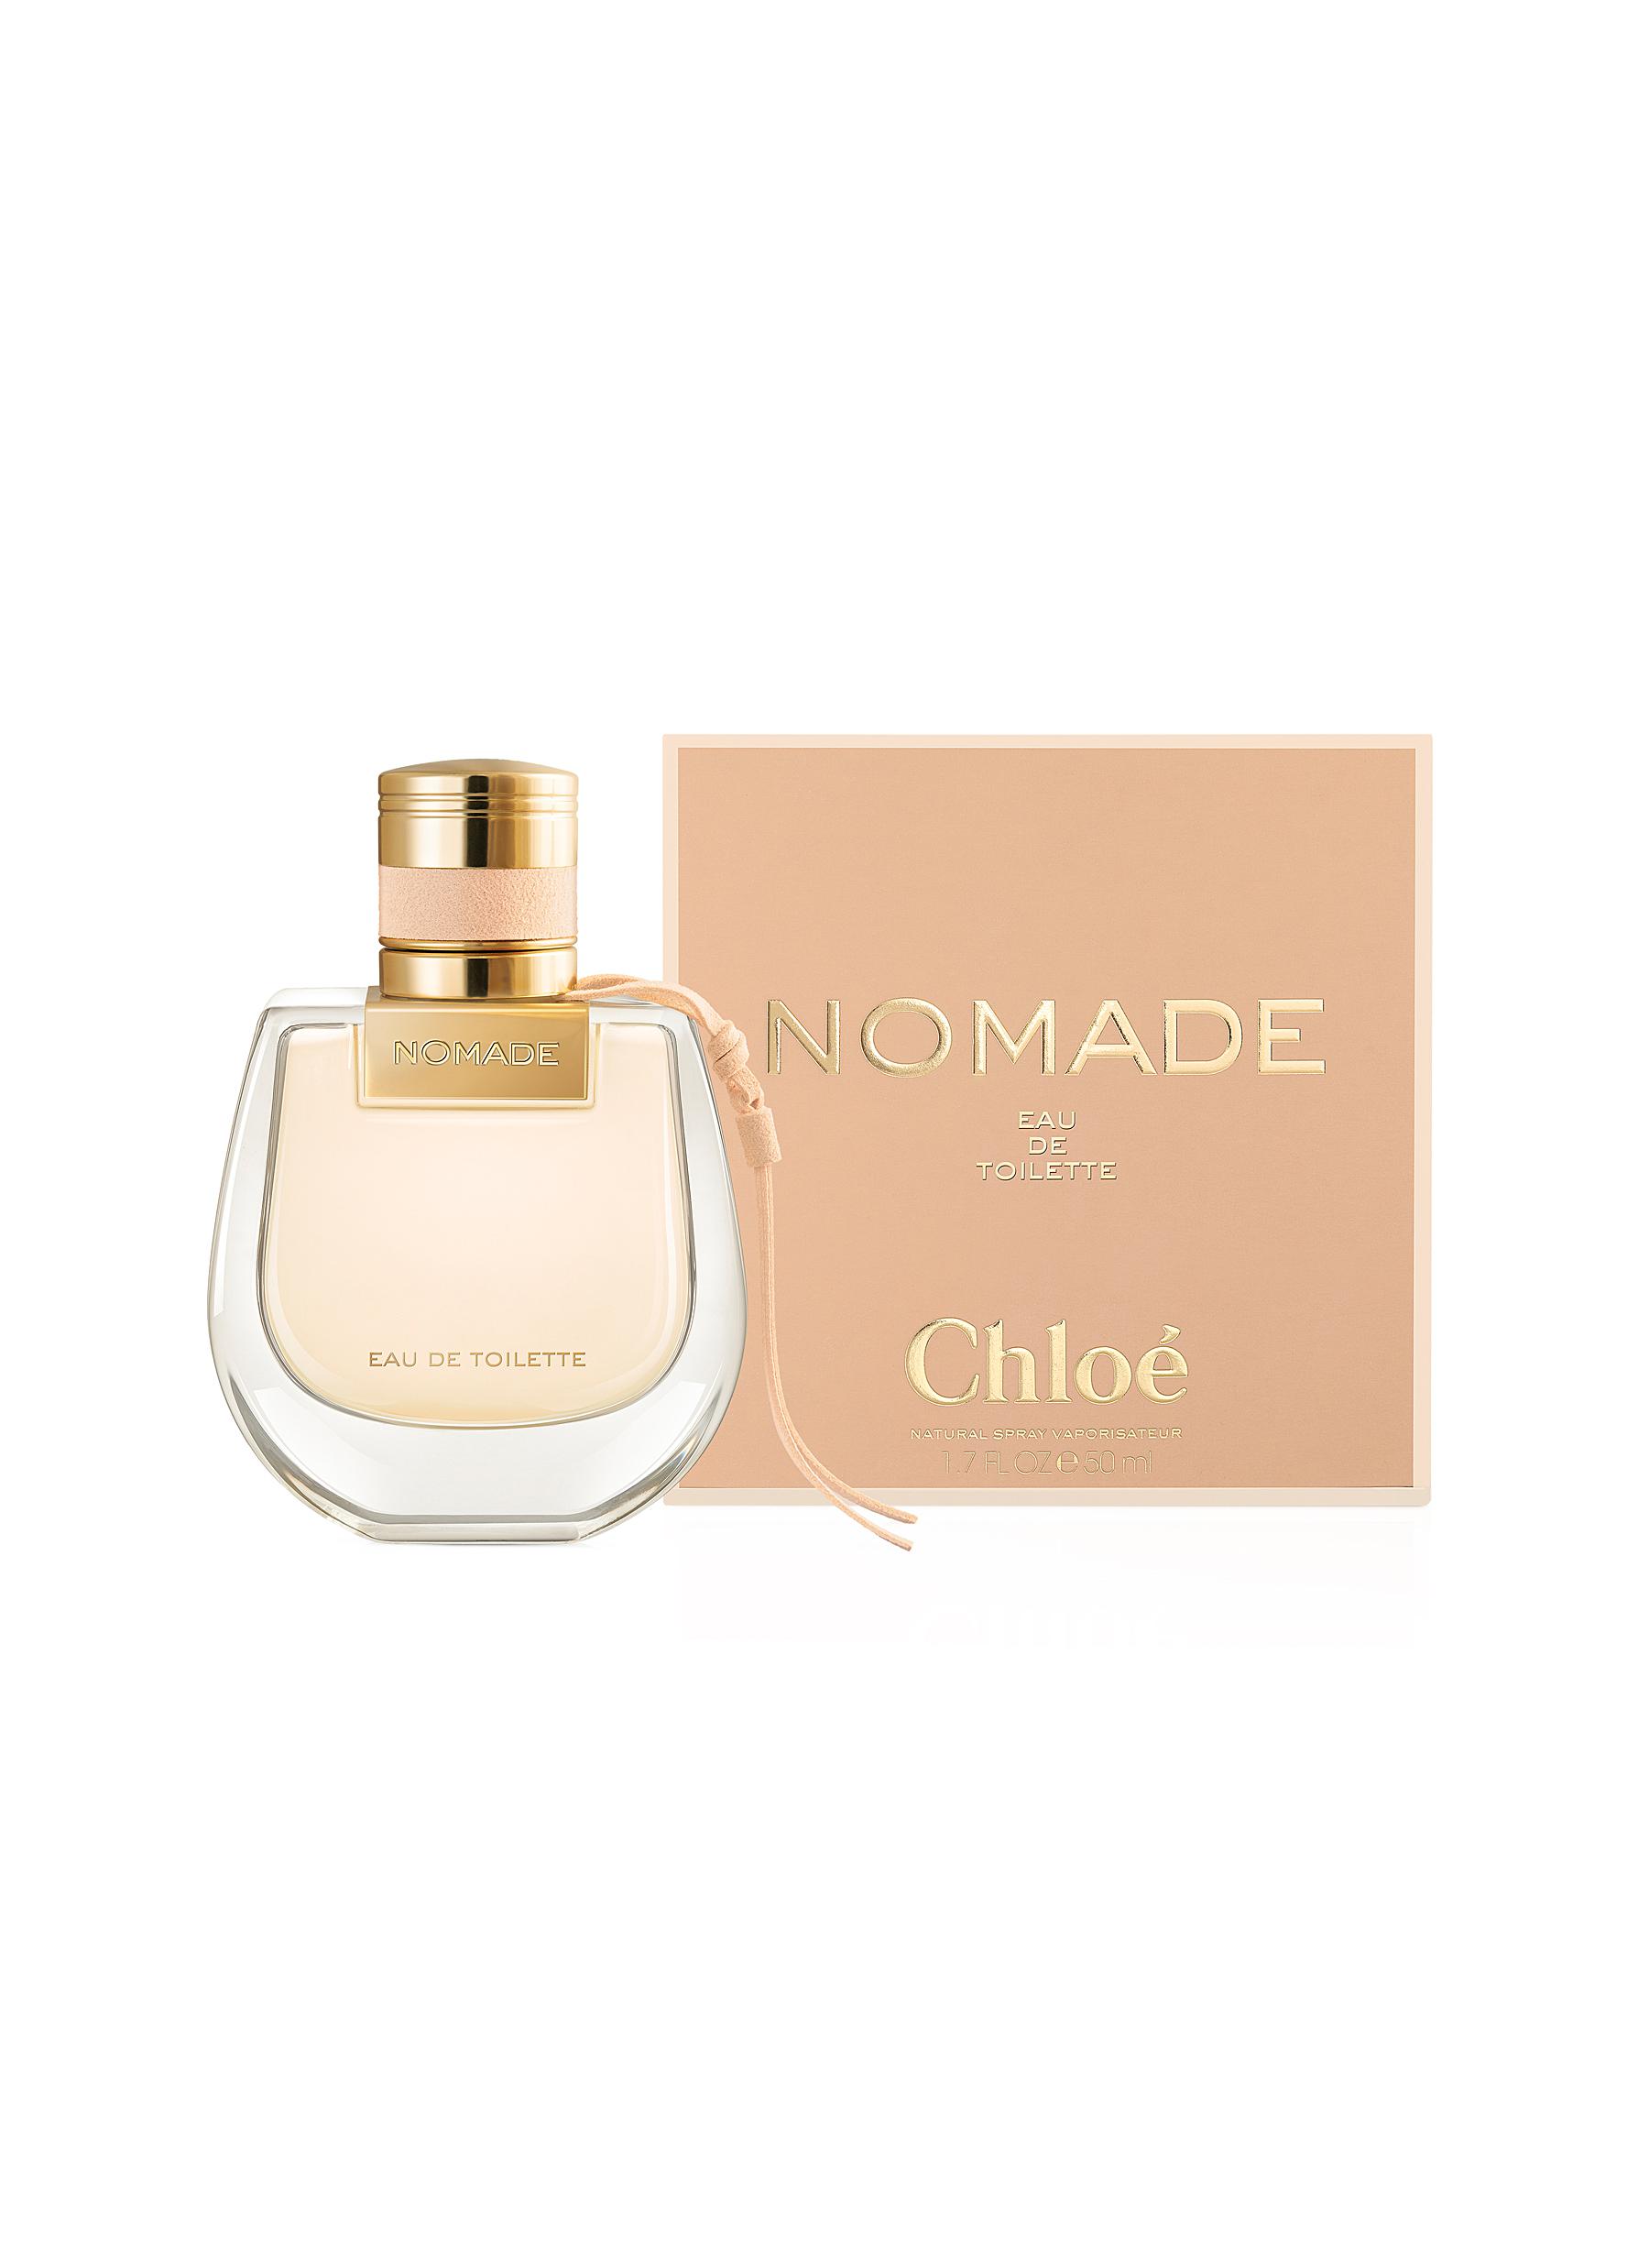 chloe nomade scent